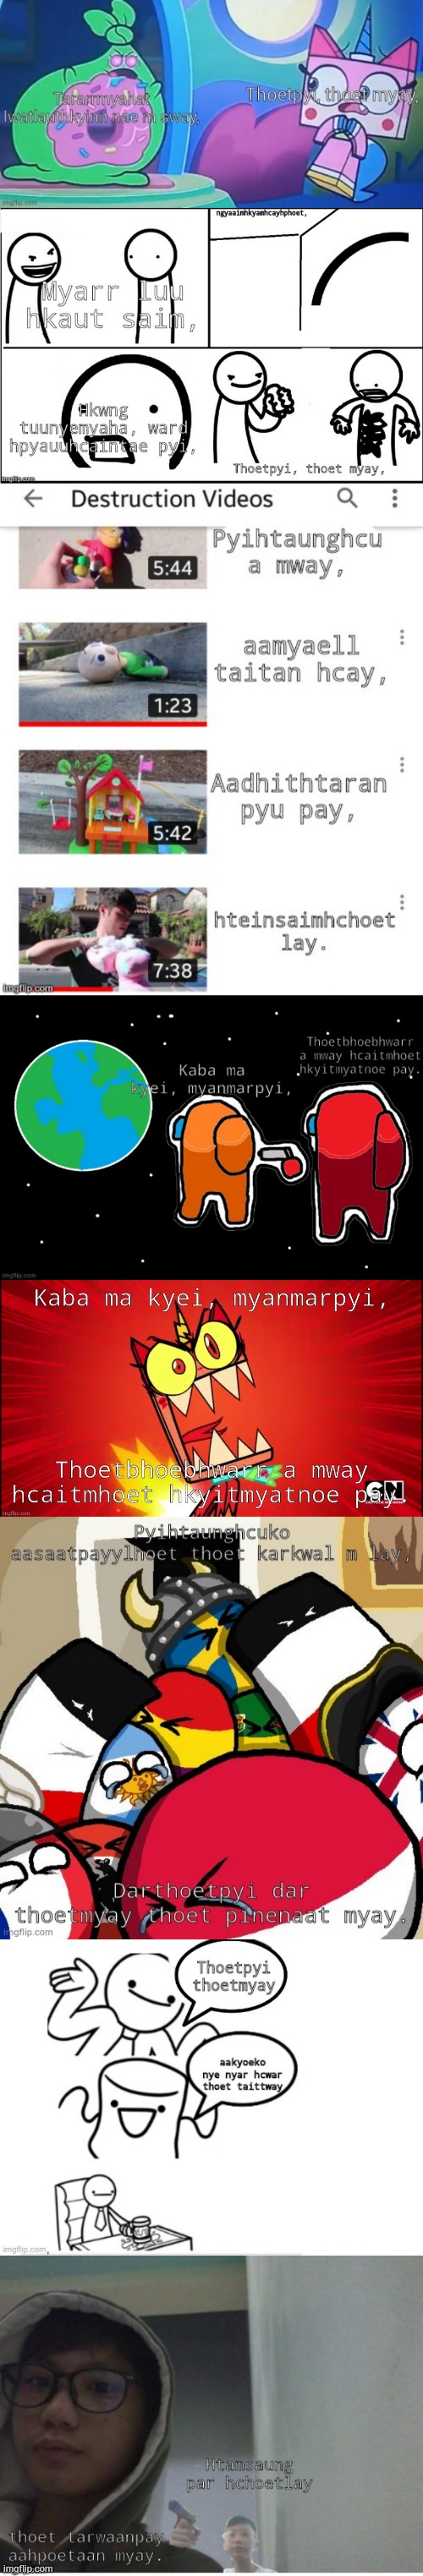 National anthem of myanmar kaba ma kyei with meme lyrics | image tagged in kaba ma kyei,myanmar,song lyrics,national anthem,asean | made w/ Imgflip meme maker